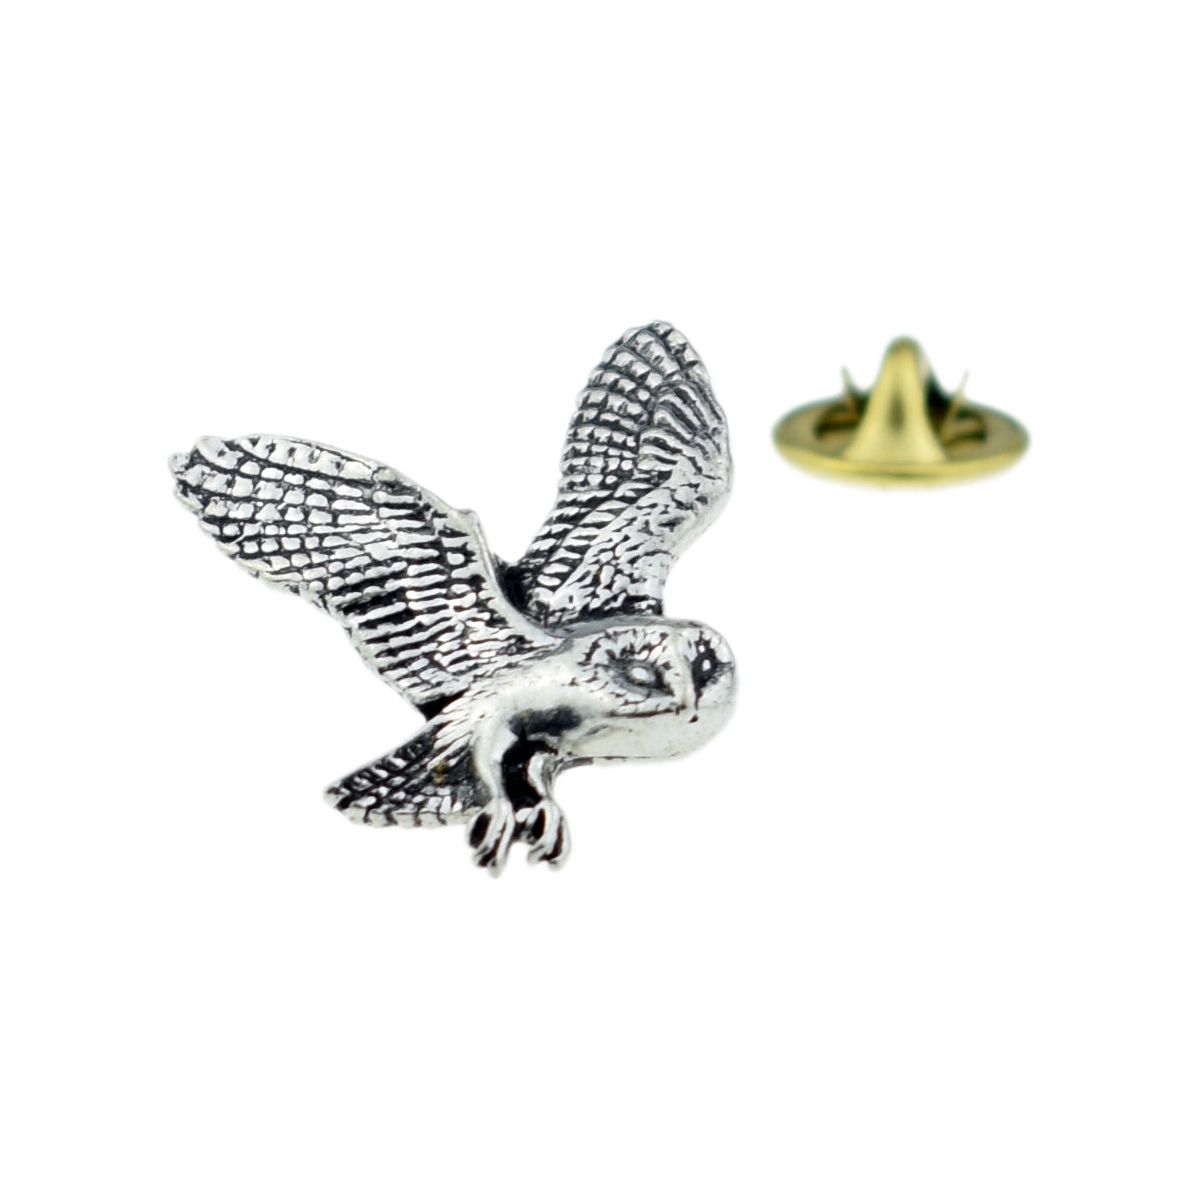 Barn Owl English Pewter Lapel Pin Badge - Ashton and Finch